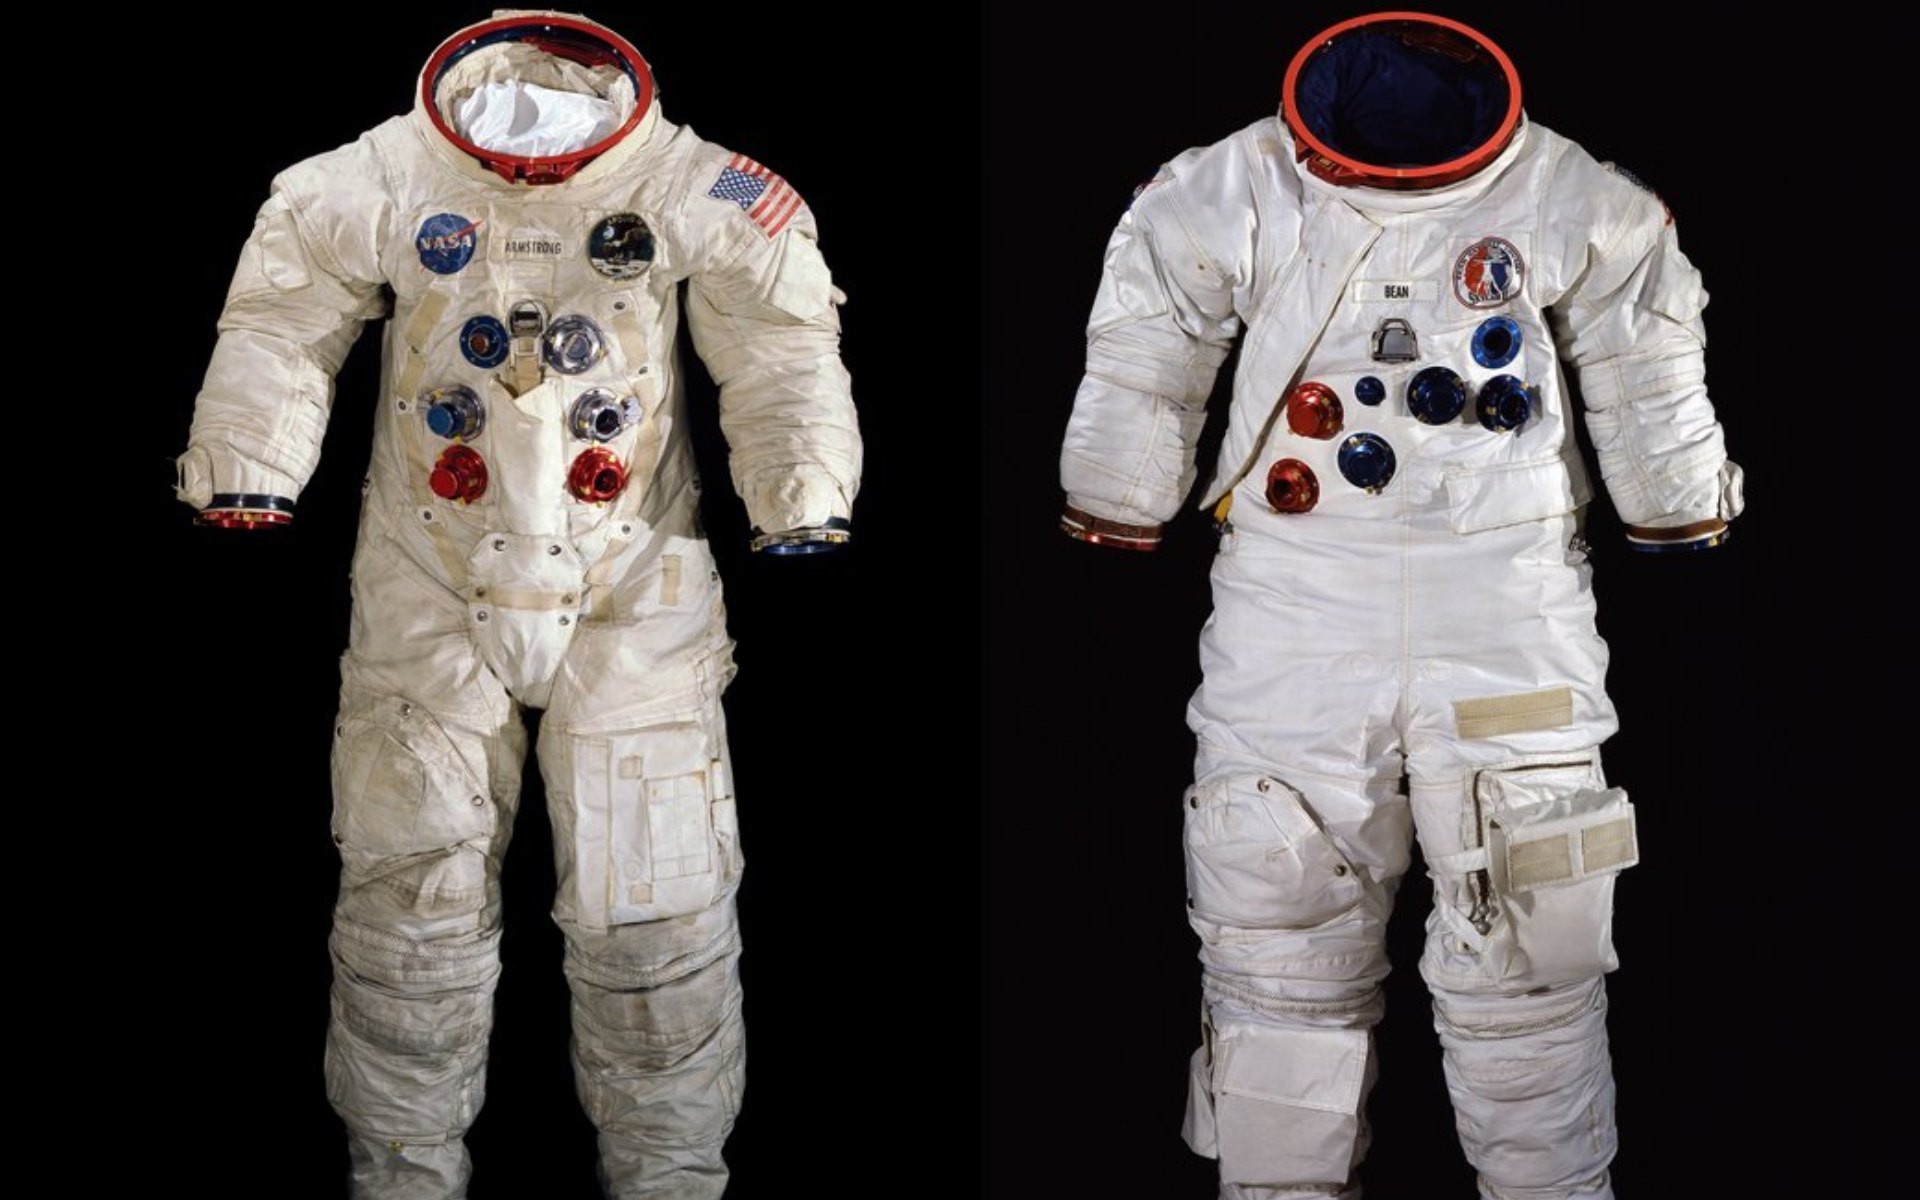 Надеть скафандры. Скафандр Космонавта НАСА. Костюм астронавта NASA 134-146. Костюмы астронавтов Аполлон 11. Скафандр Аполлон 11.